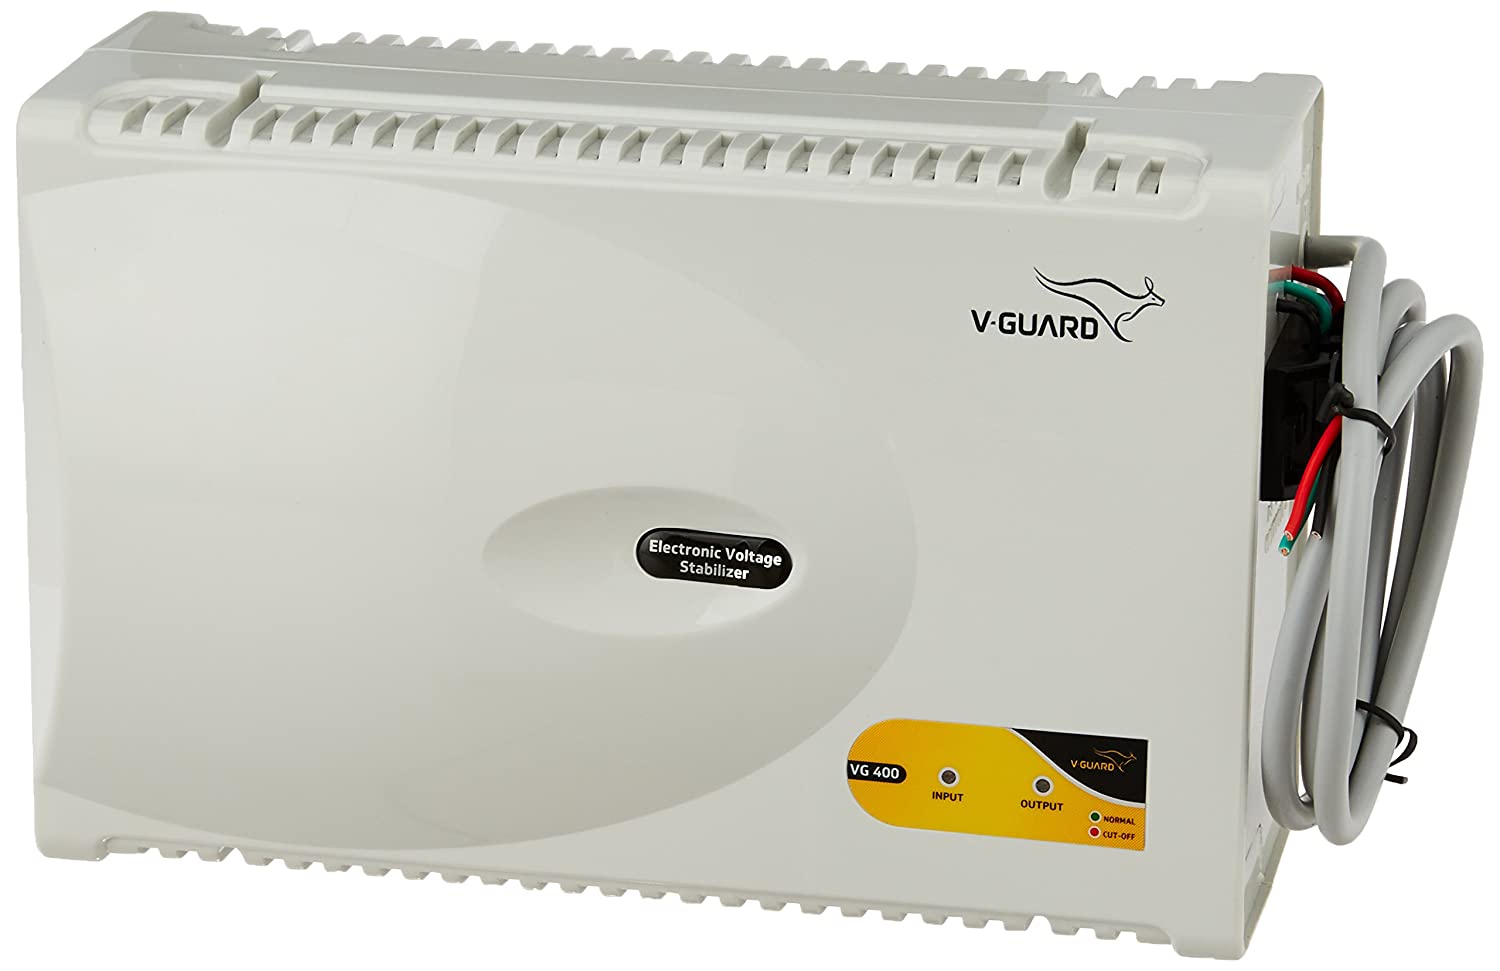 V-Guard VG 400 Voltage Stabilizer (328 x 216 x 152 MM)